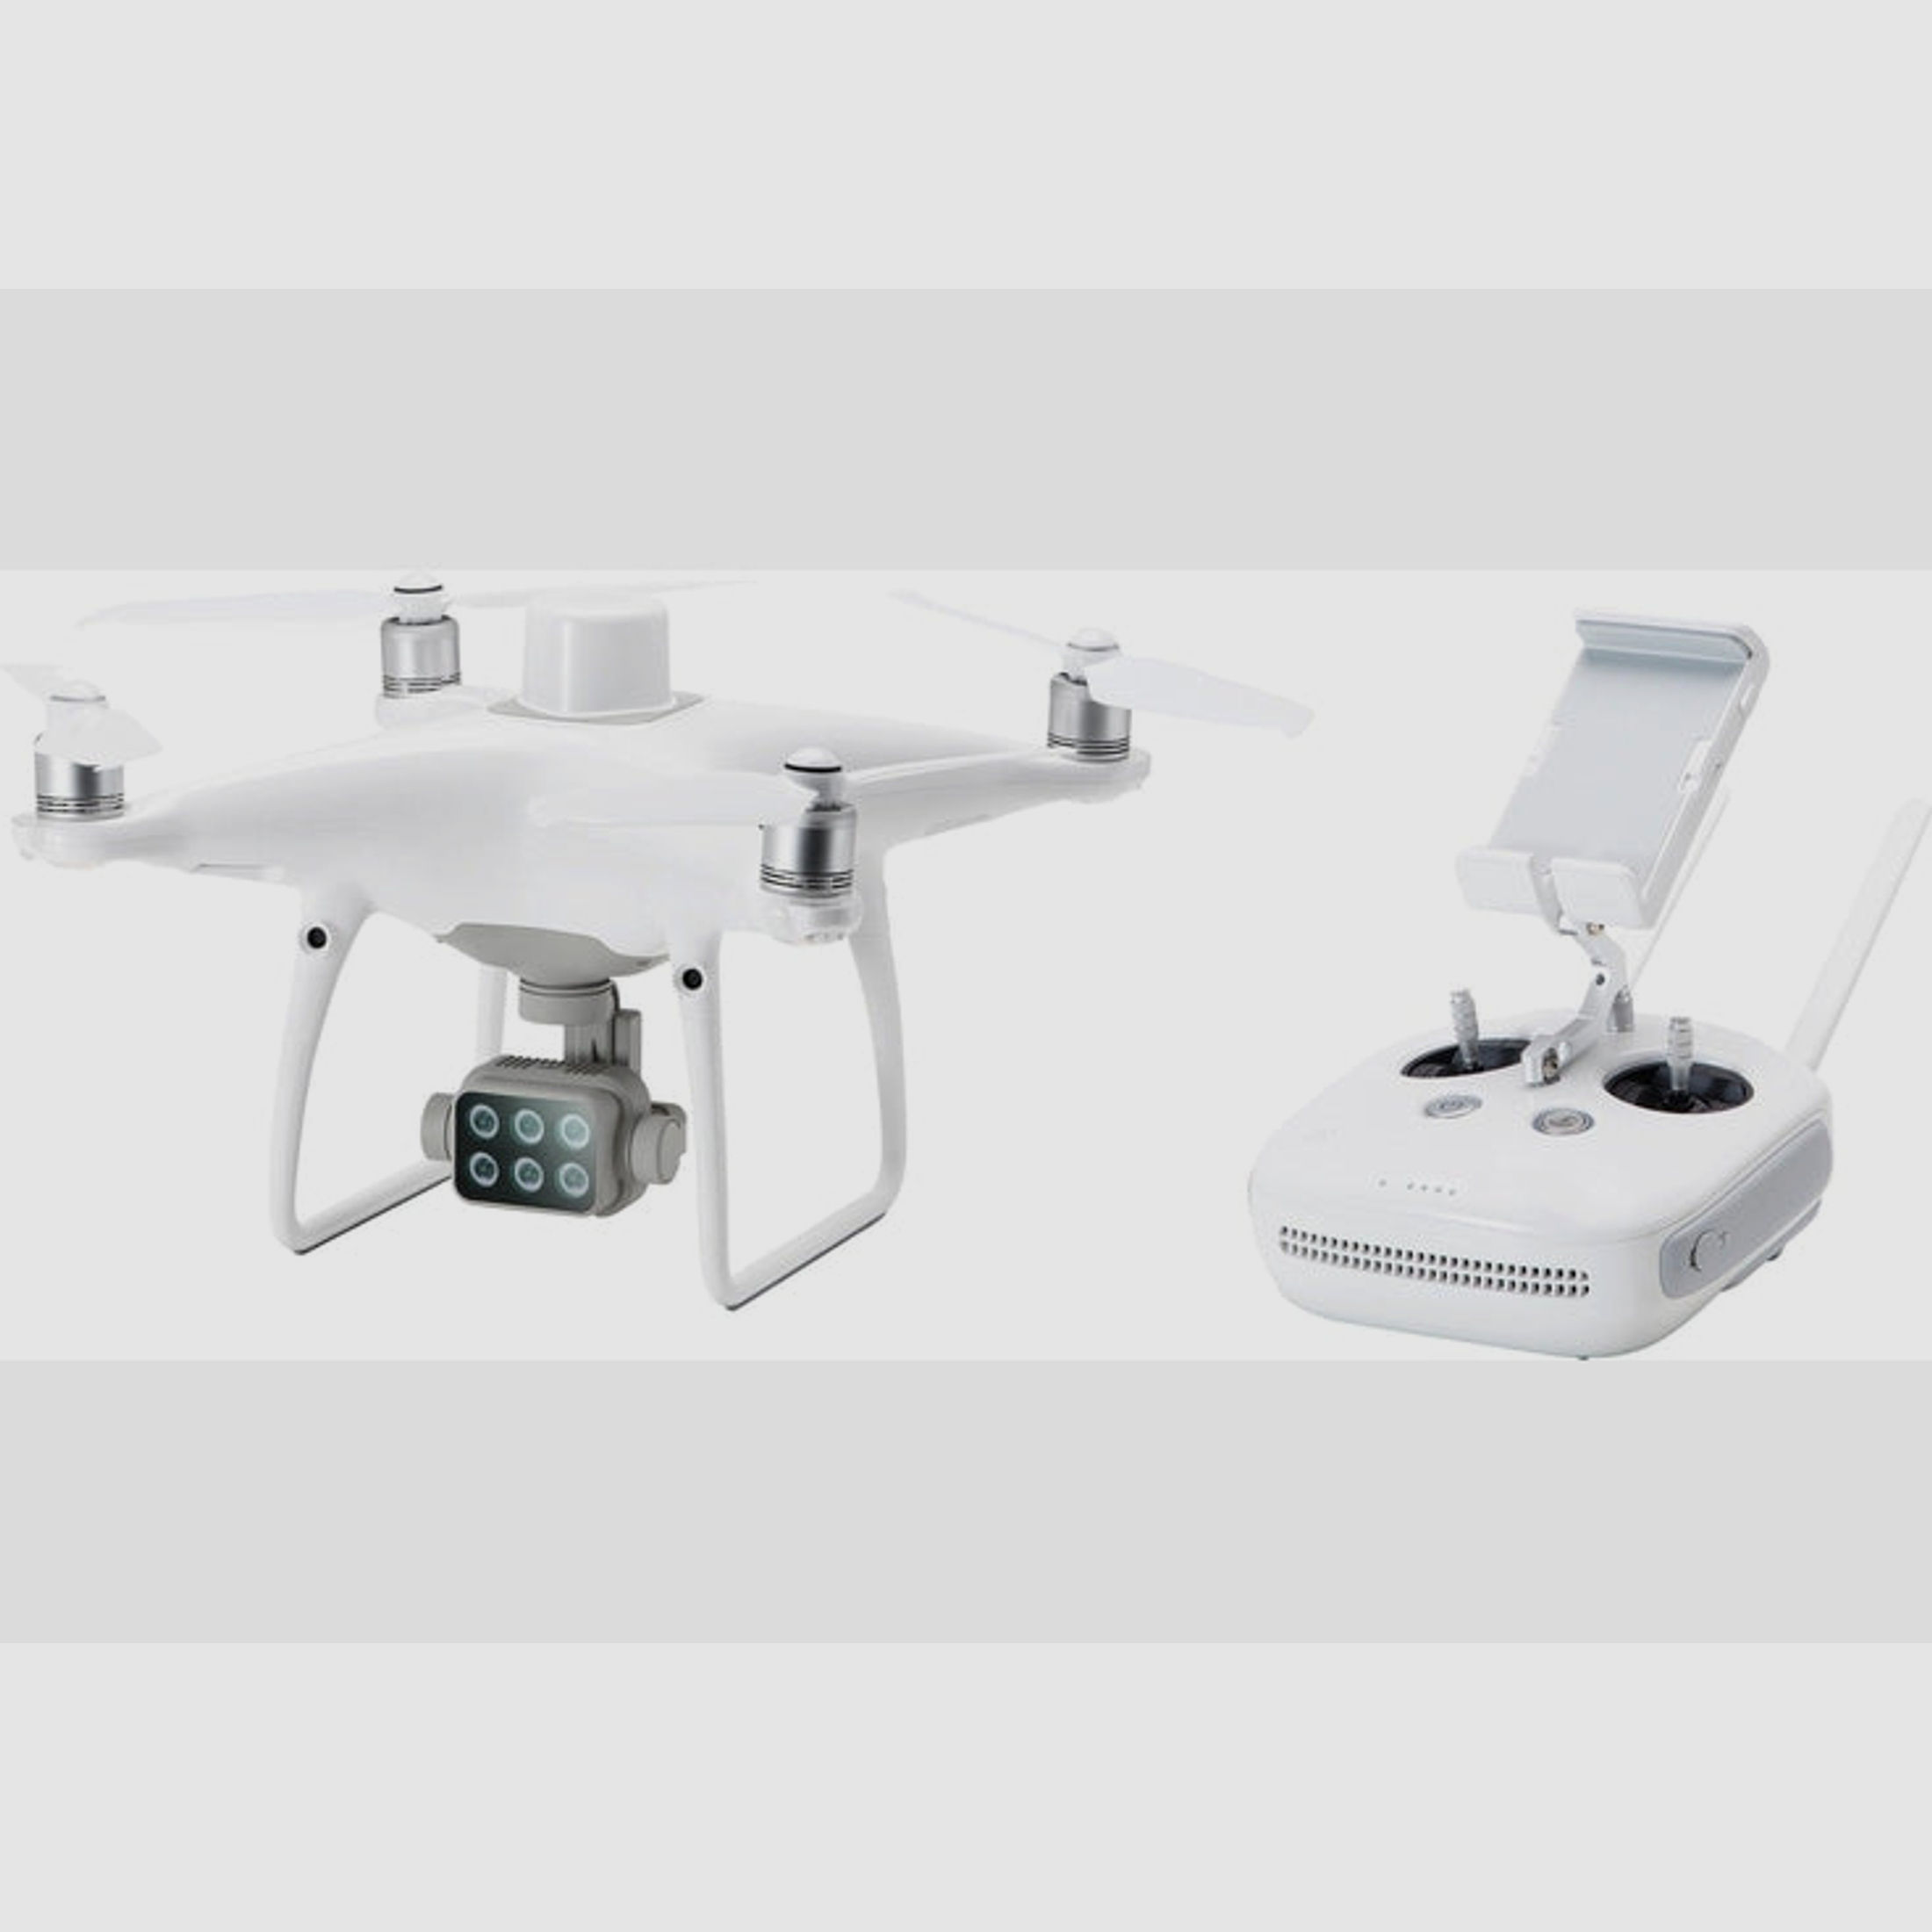 DJI Phantom 4 RTK Multispectral Drohne mit 5 Spektralkameras